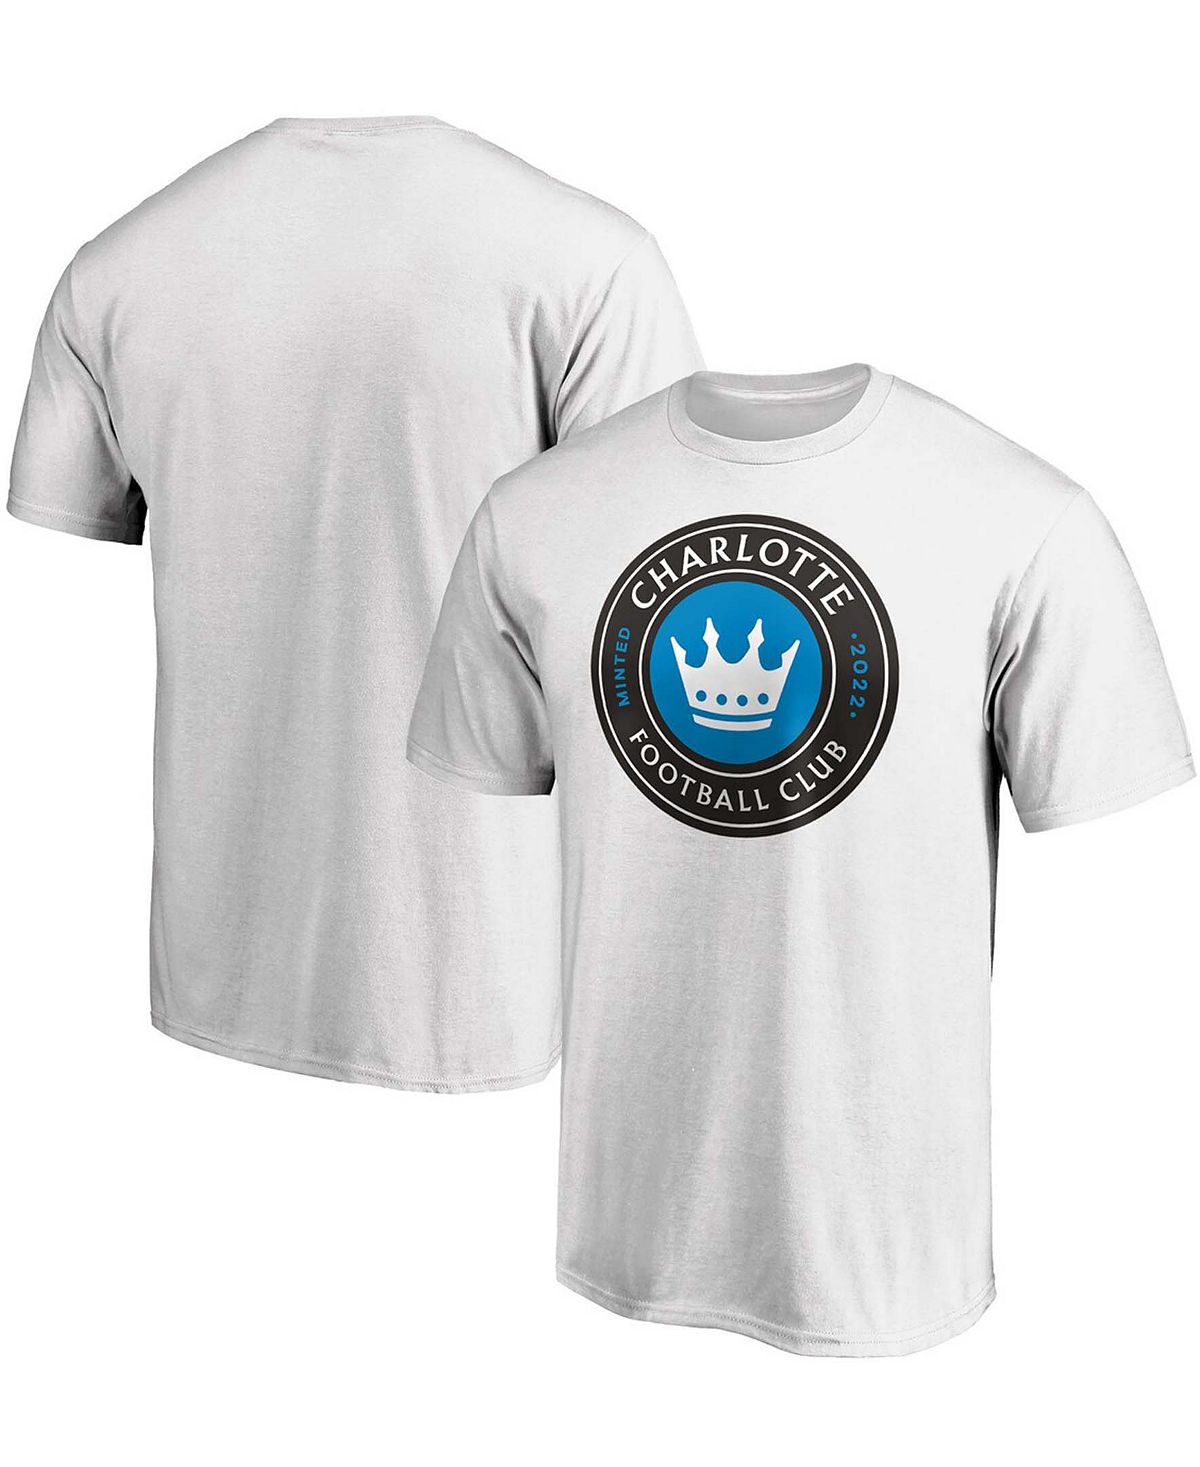 Мужская белая футболка с логотипом Charlotte FC Primary Team Fanatics